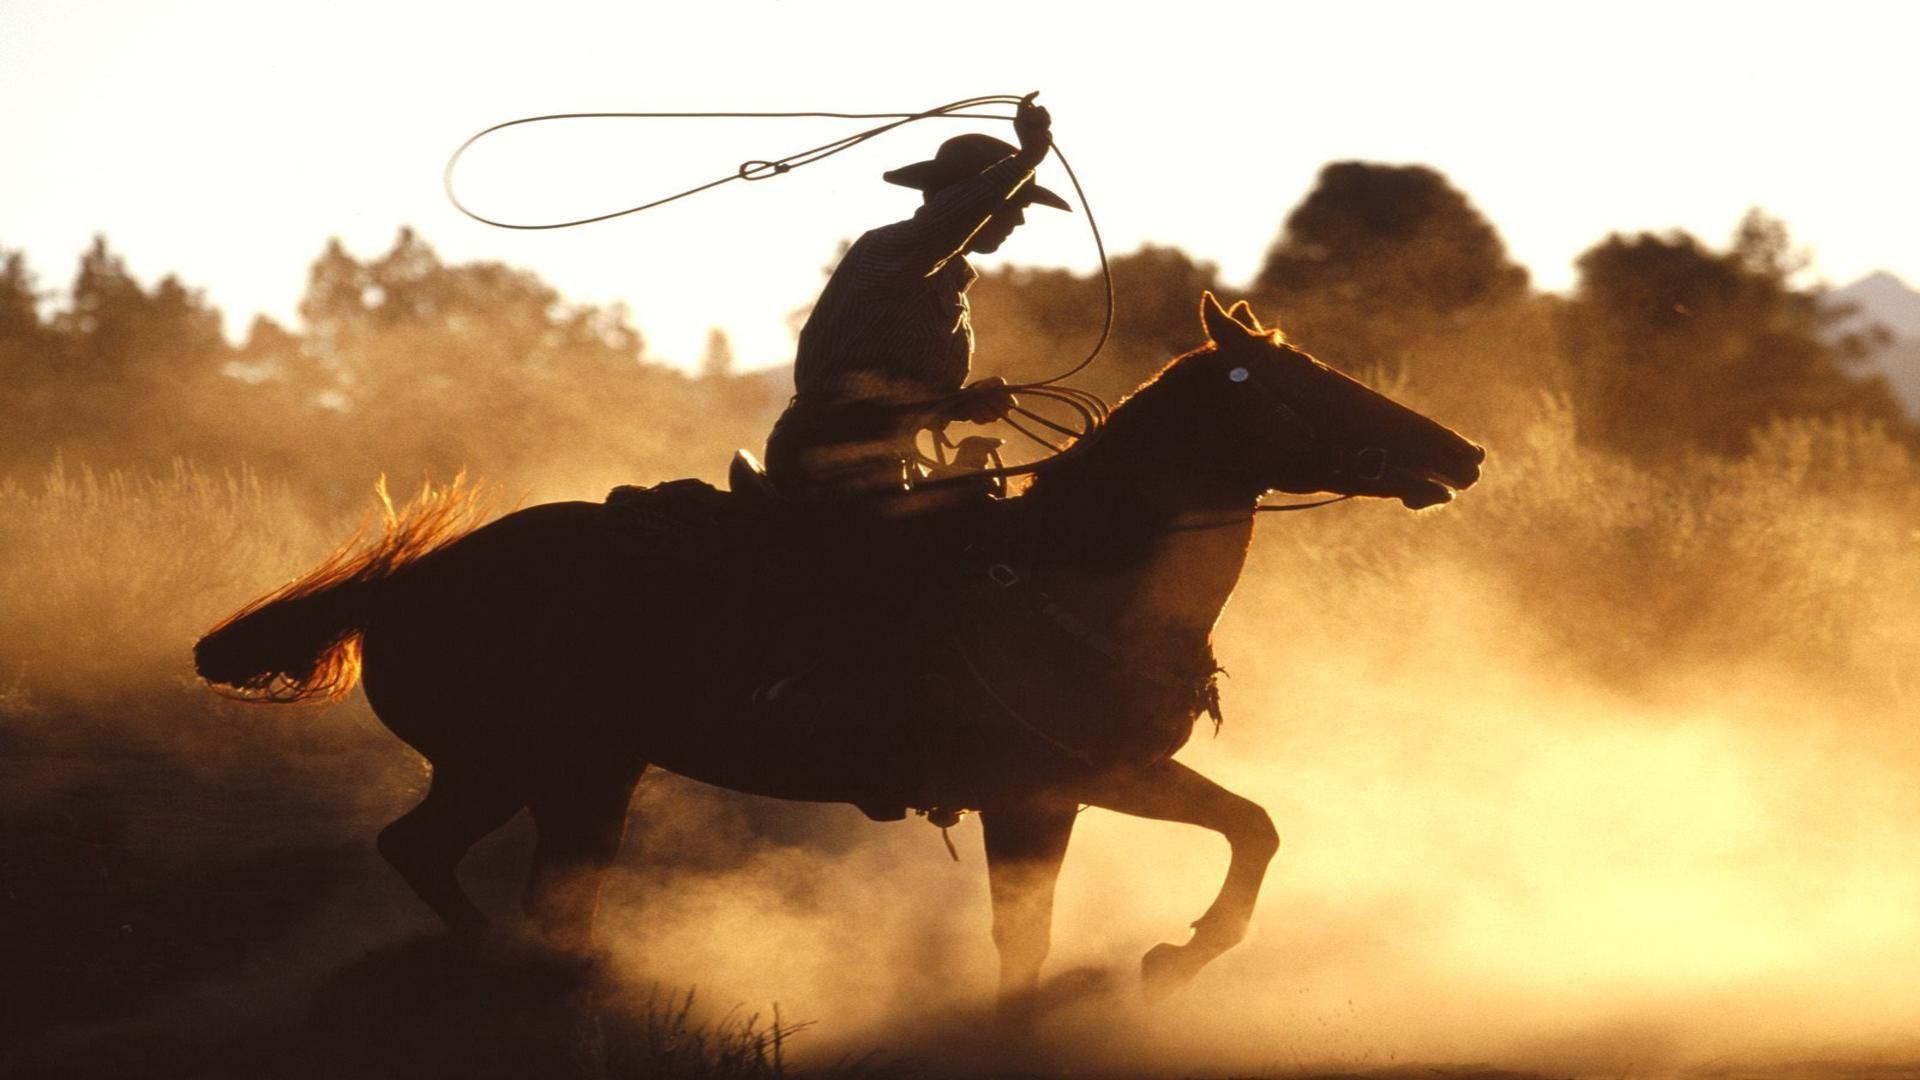 Cowboy Background Images  Free Download on Freepik